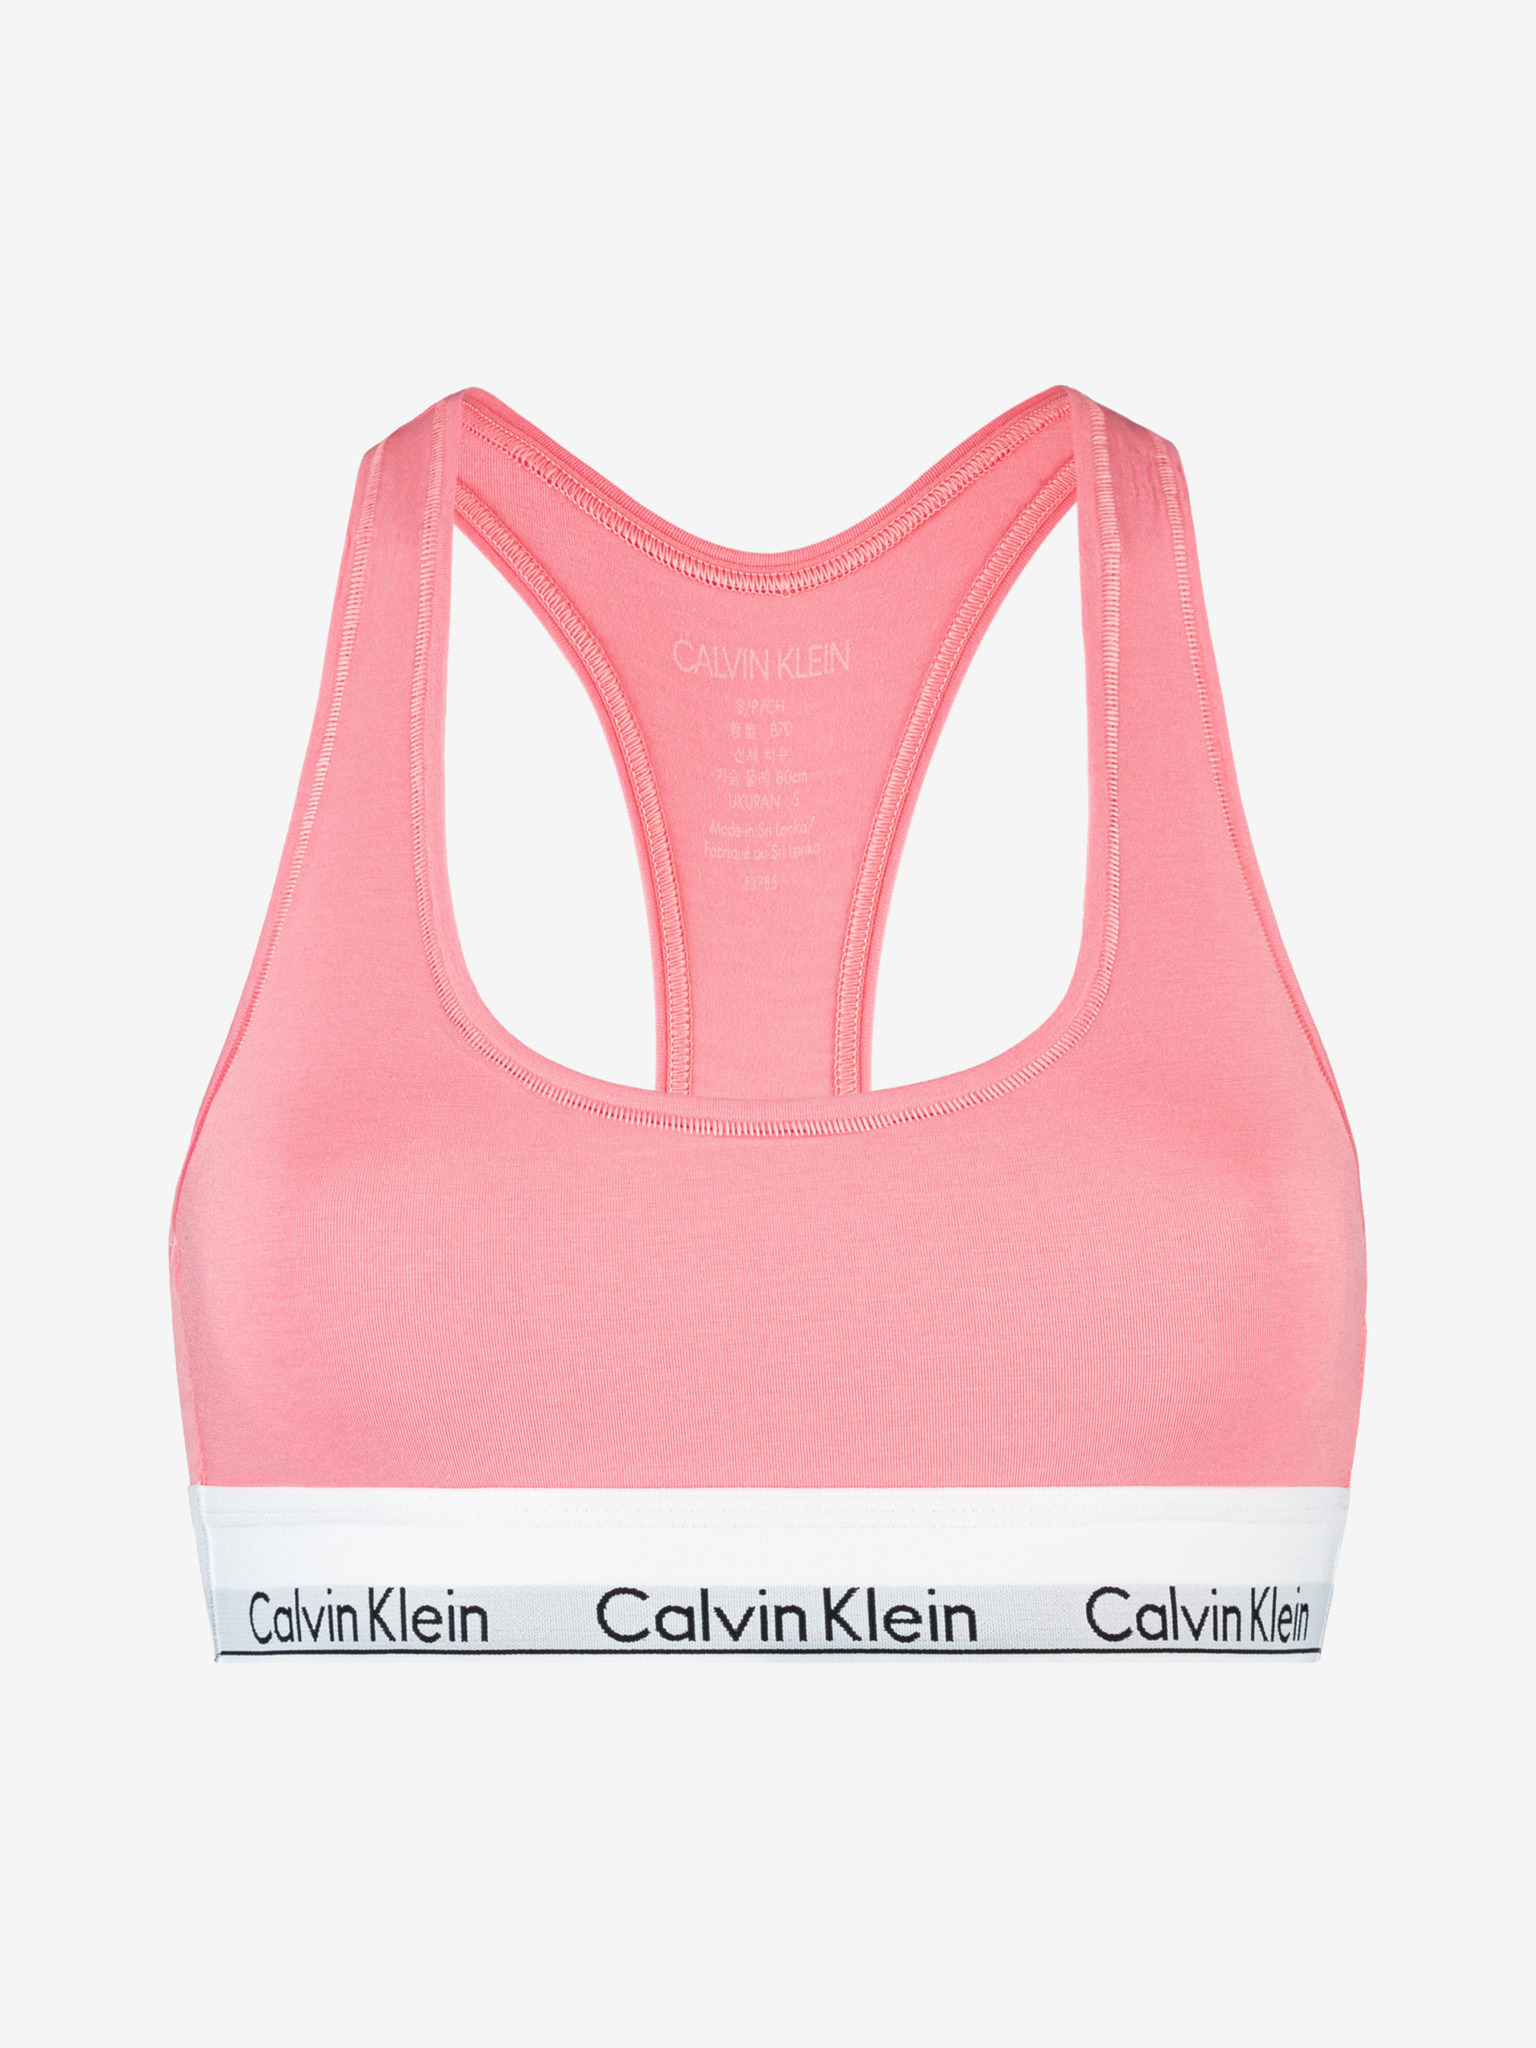 Calvin Klein - Bra Bibloo.com